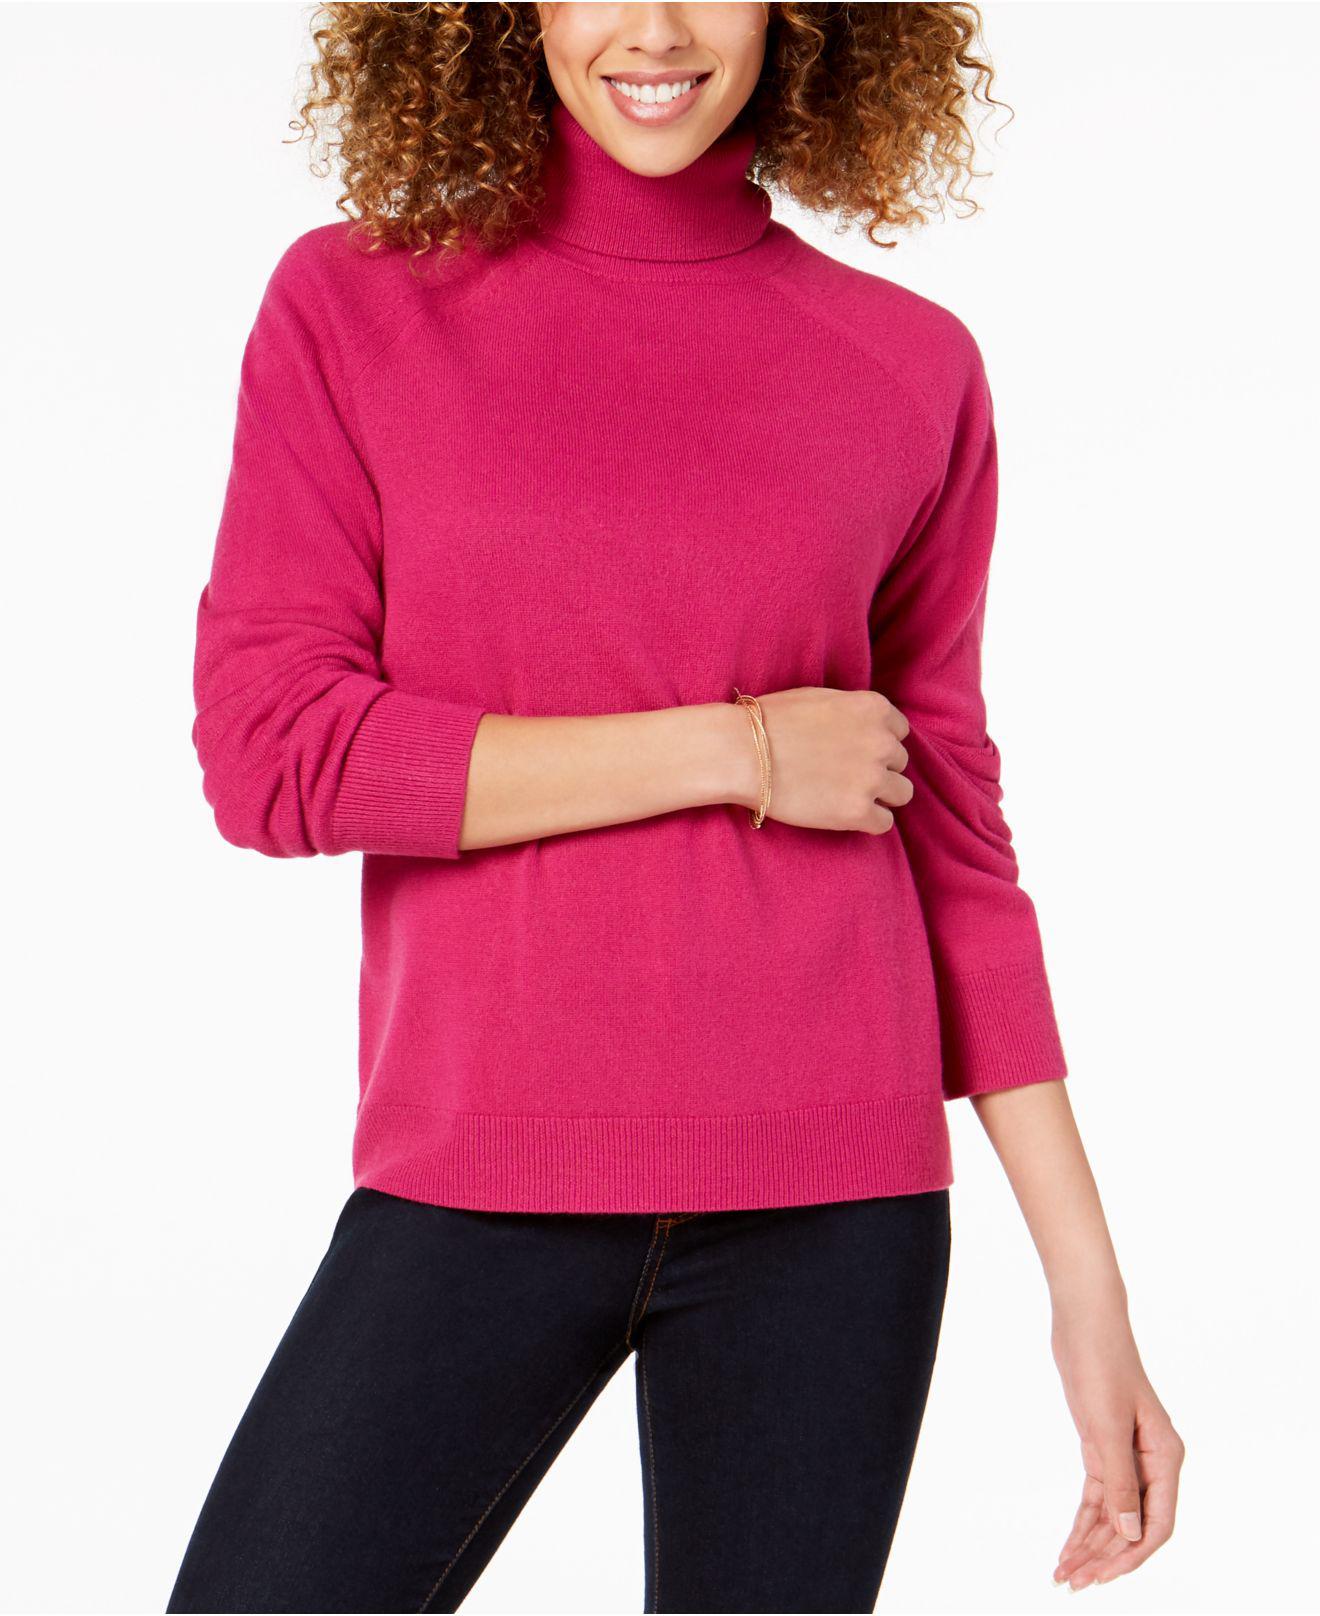 Lyst - Karen Scott Luxsoft Turtleneck Sweater, Created For Macy's